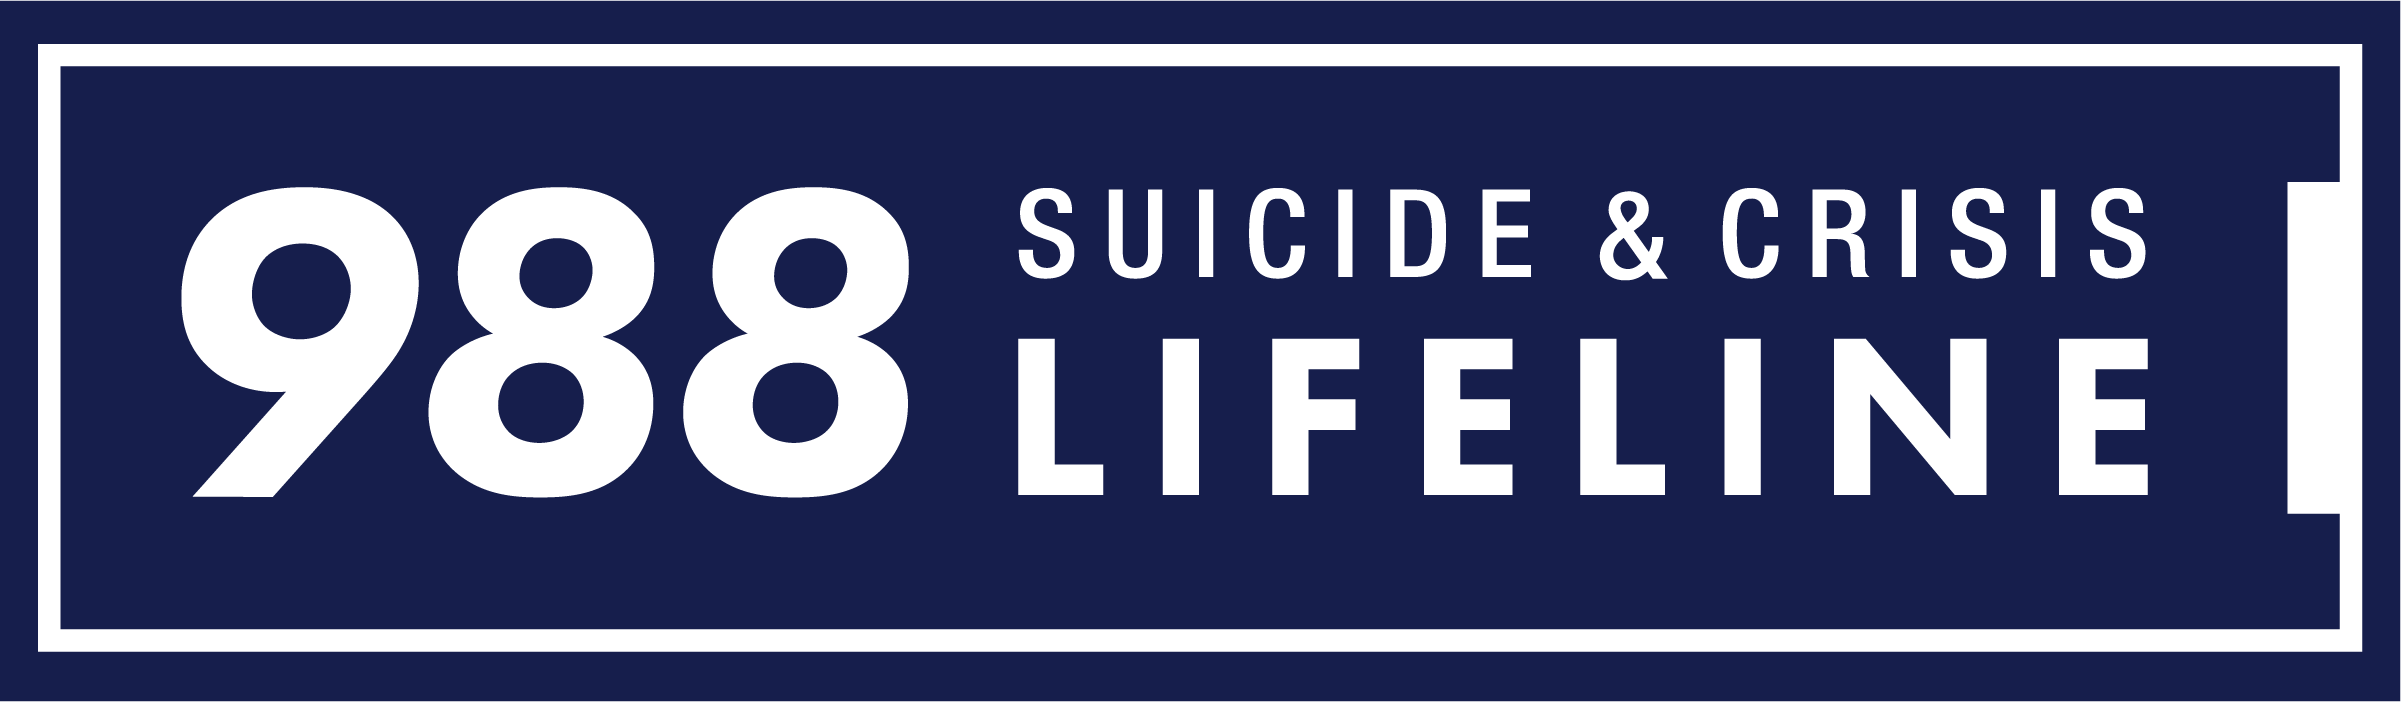 National Suicide Prevention Lifeline logo.png